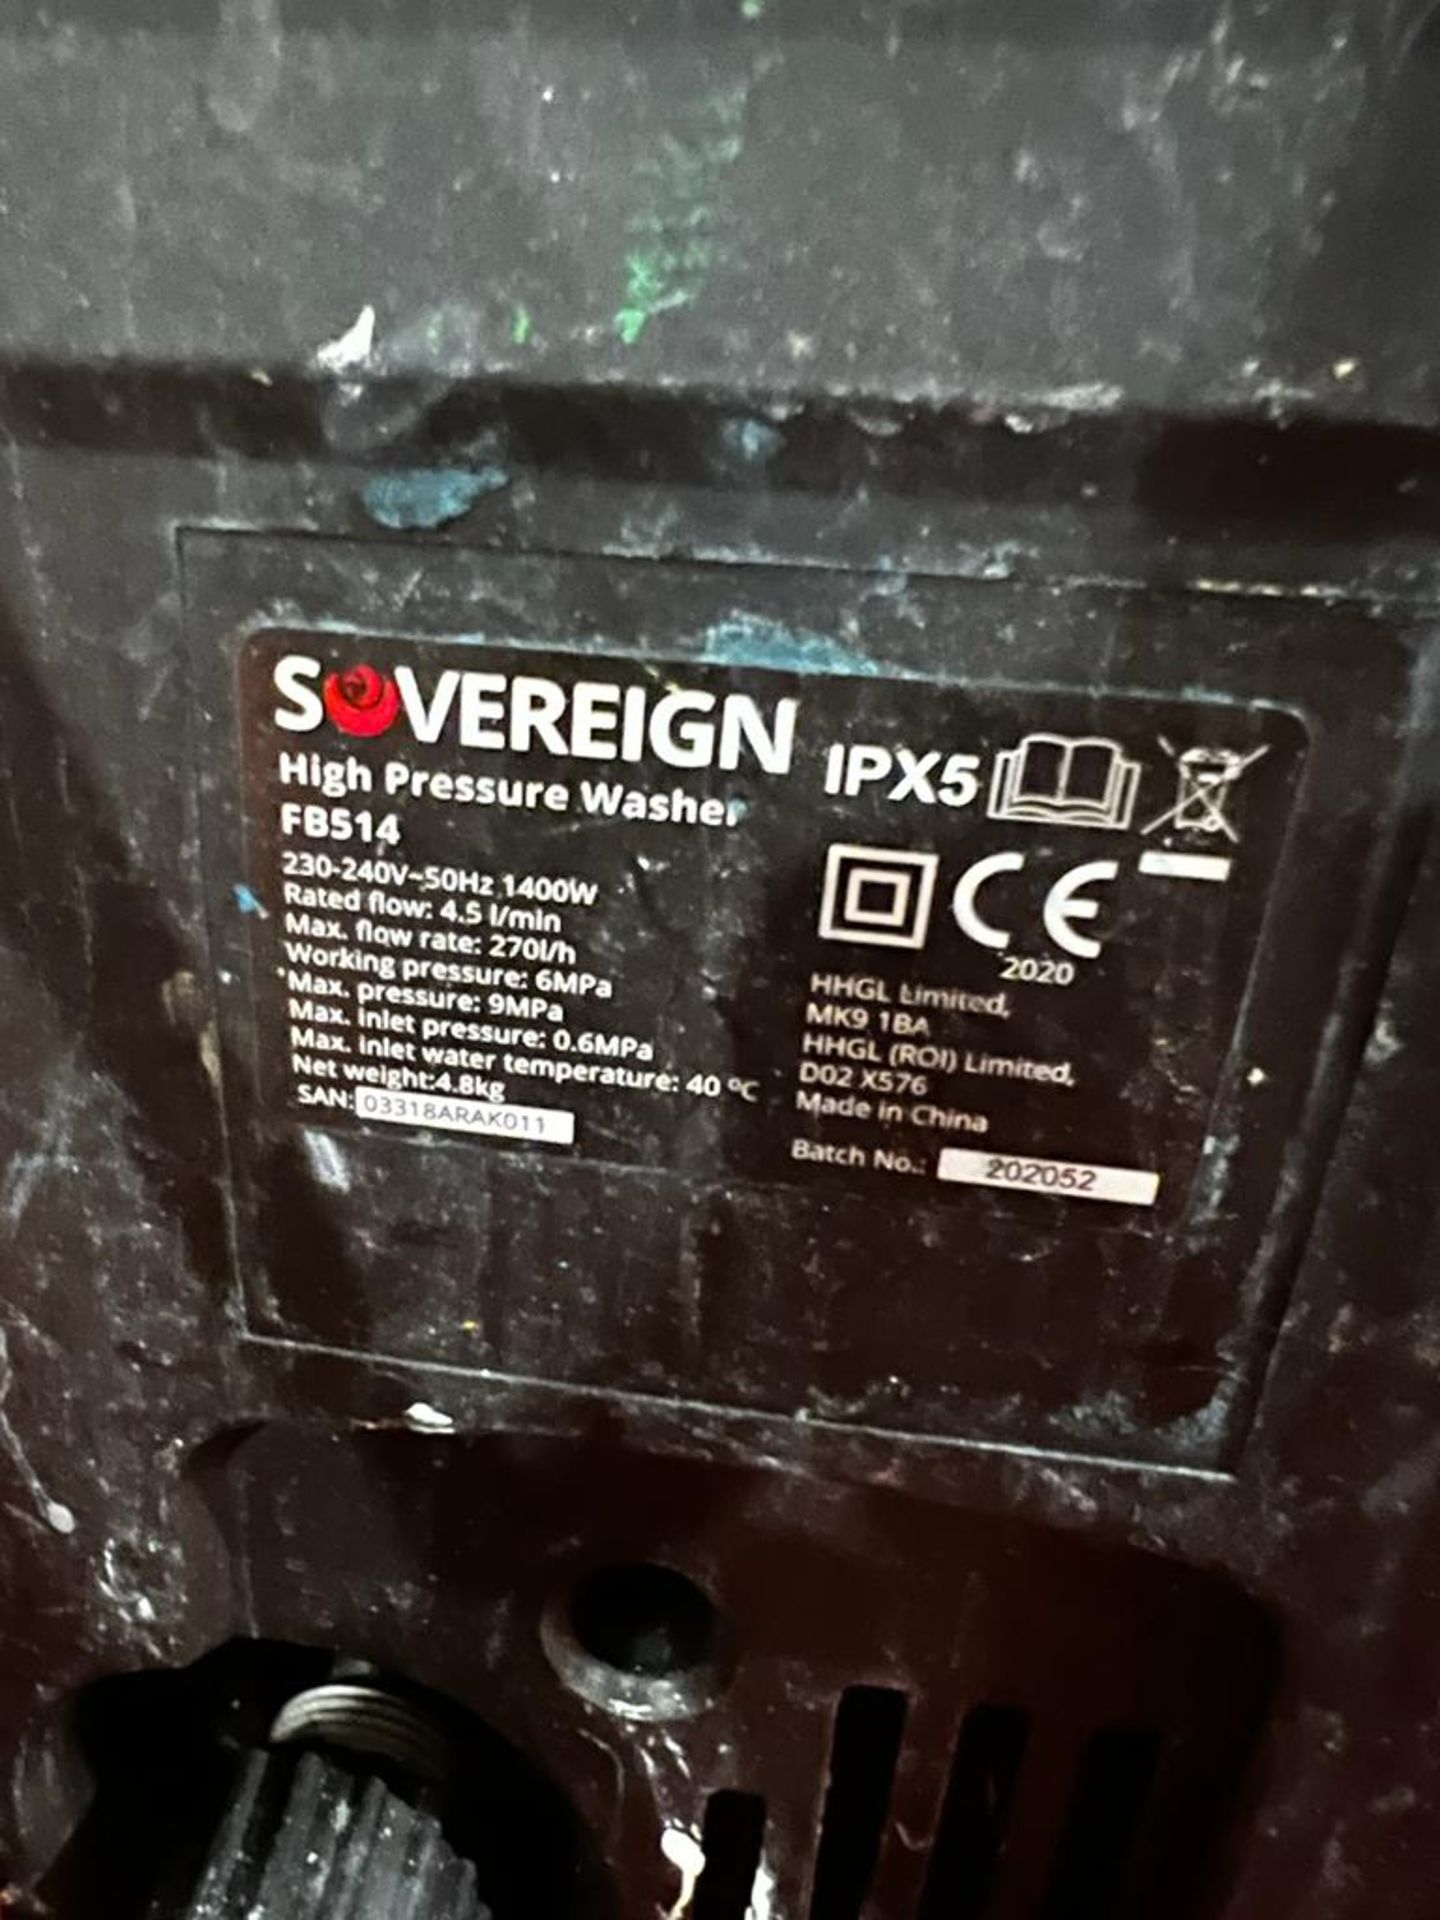 Sovereign portable high pressure washer, model FB514, 240v - Image 2 of 3